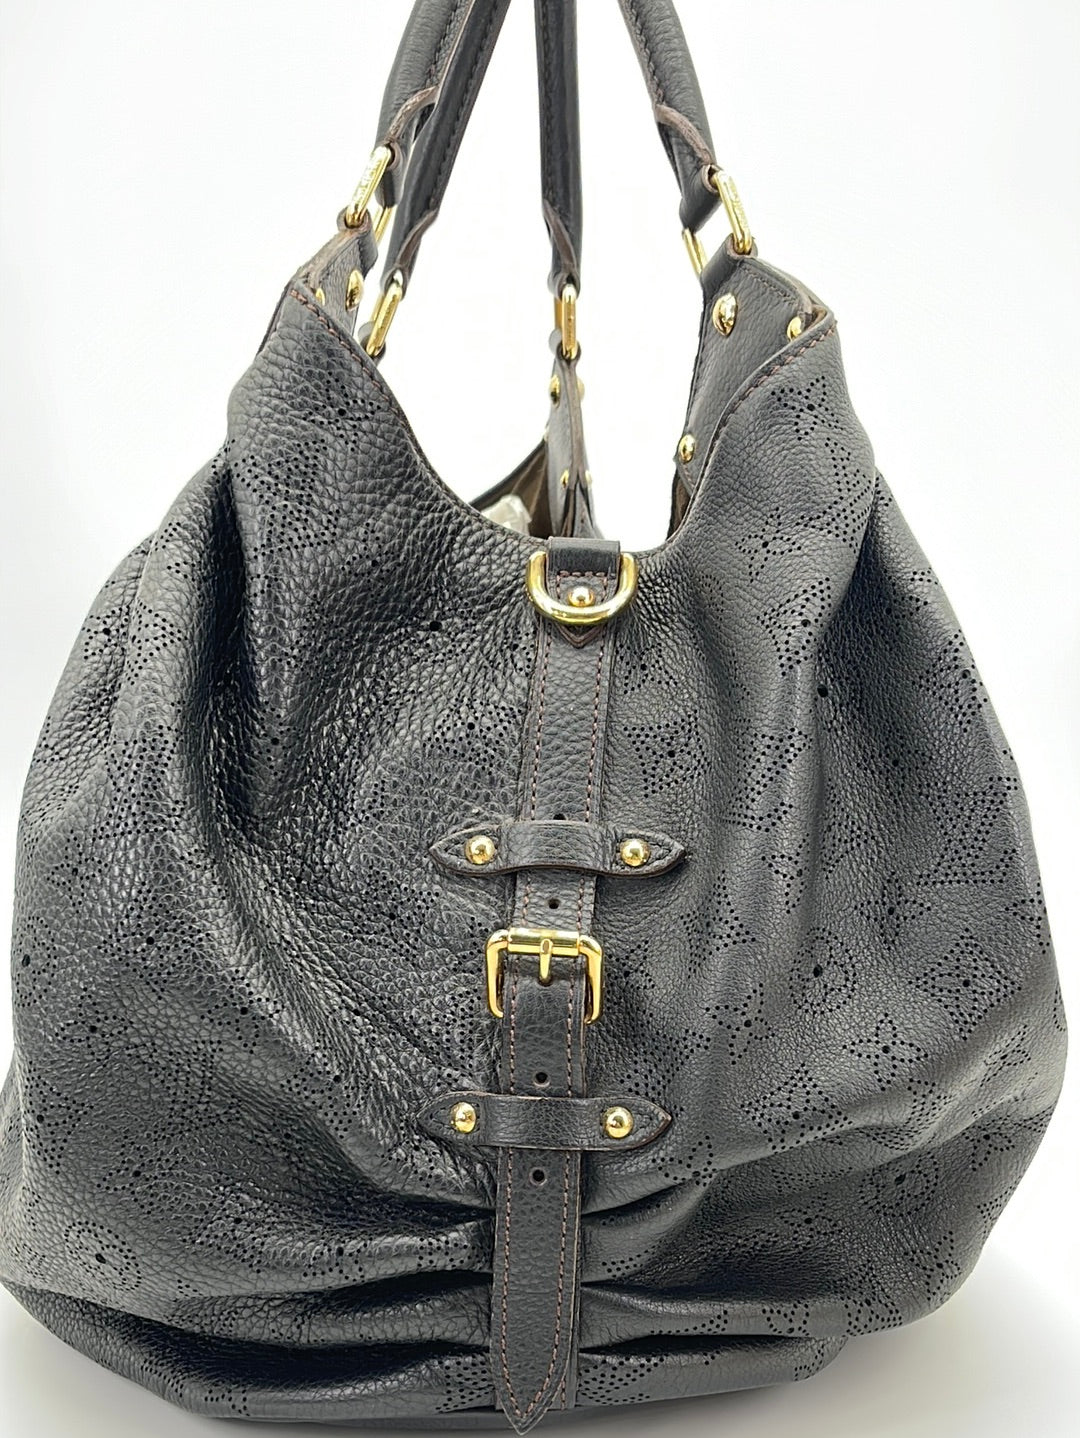 PRELOVED Louis Vuitton XL Hobo Black Mahina Leather Shoulder Bag TJ4151 060923